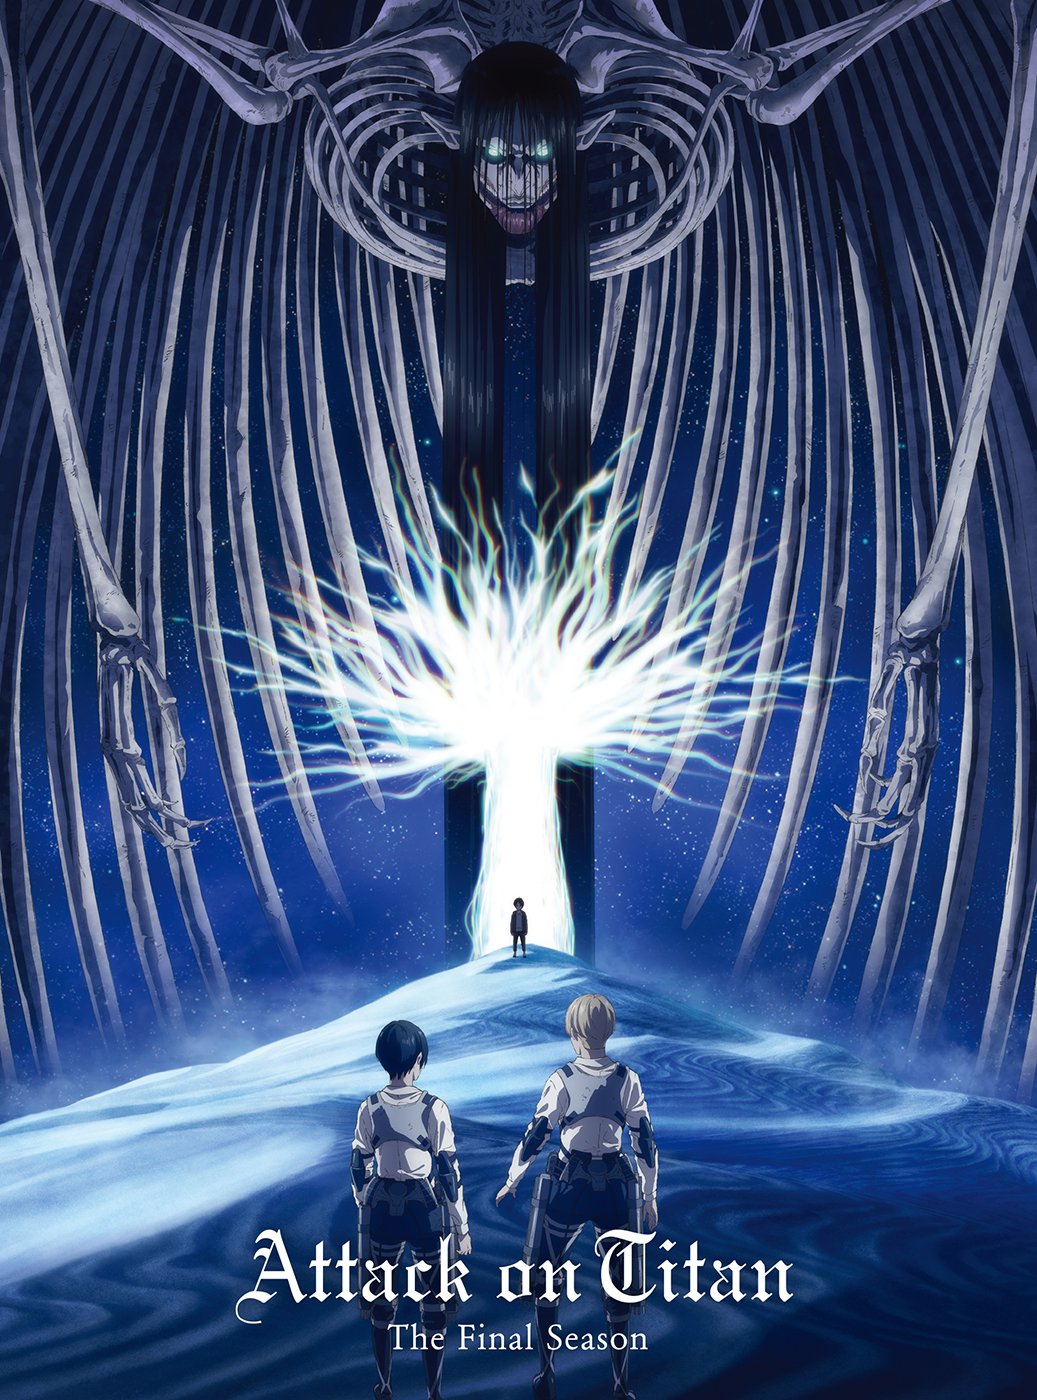 Poster siêu phẩm anime Attack On Titan The Final Season